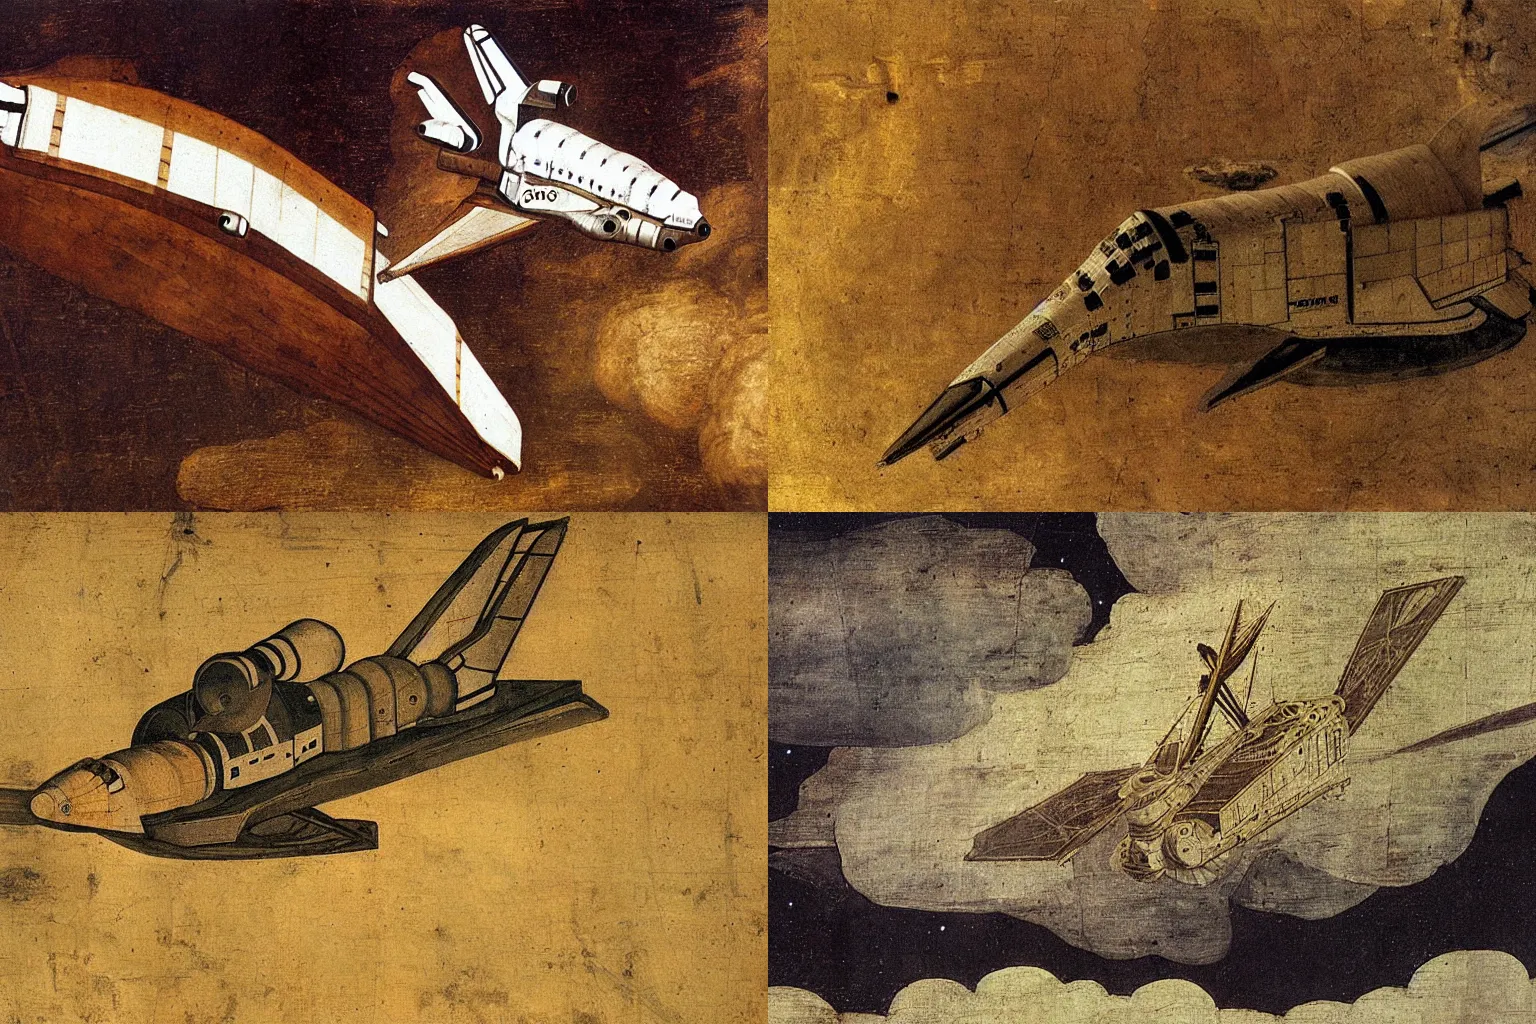 Prompt: space shuttle painted by Leonardo da Vinci